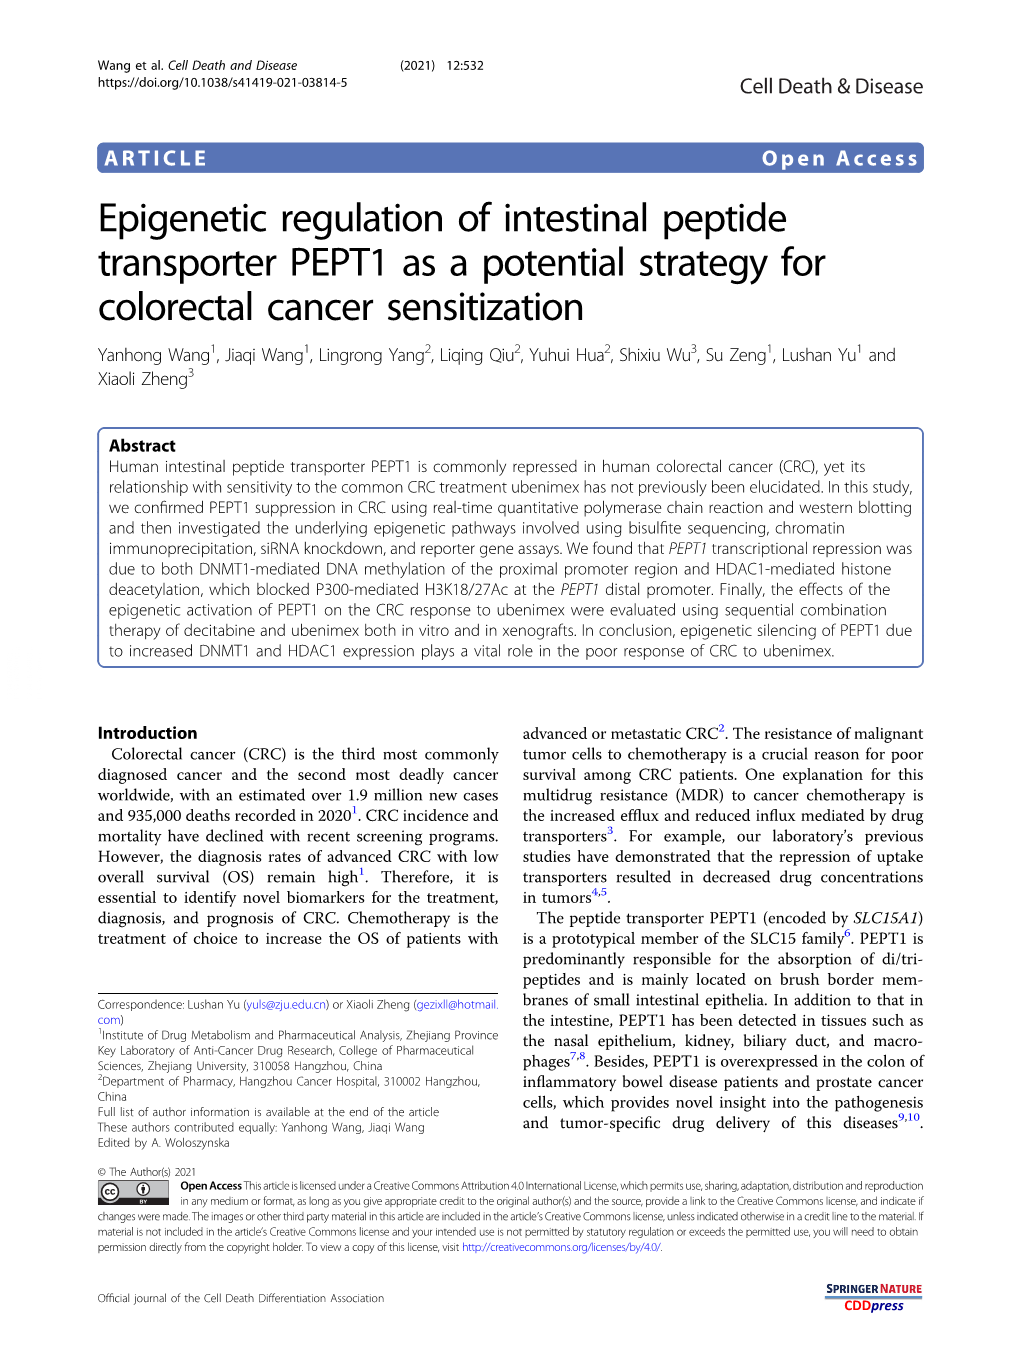 Epigenetic Regulation of Intestinal Peptide Transporter PEPT1